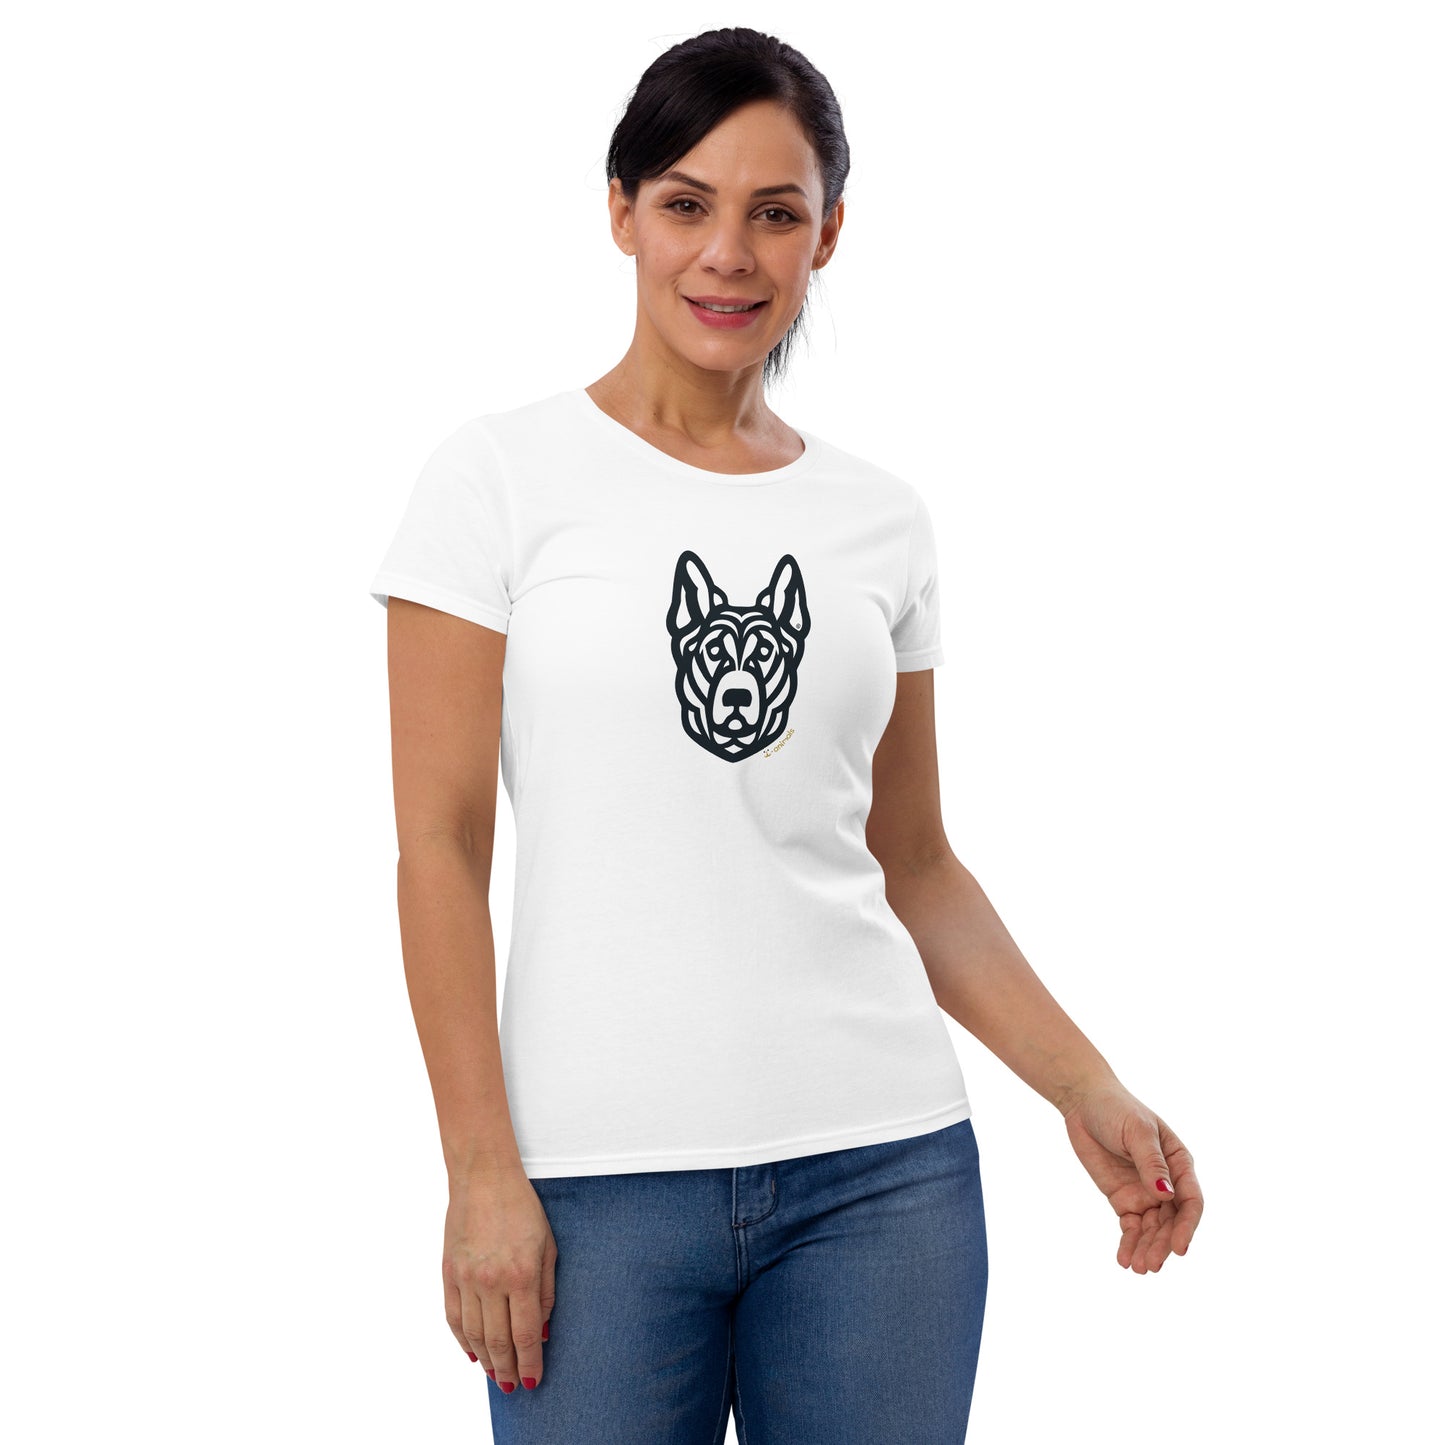 Women's Fashion Fit T-Shirt - German Shepherd - Tribal - Light Colors